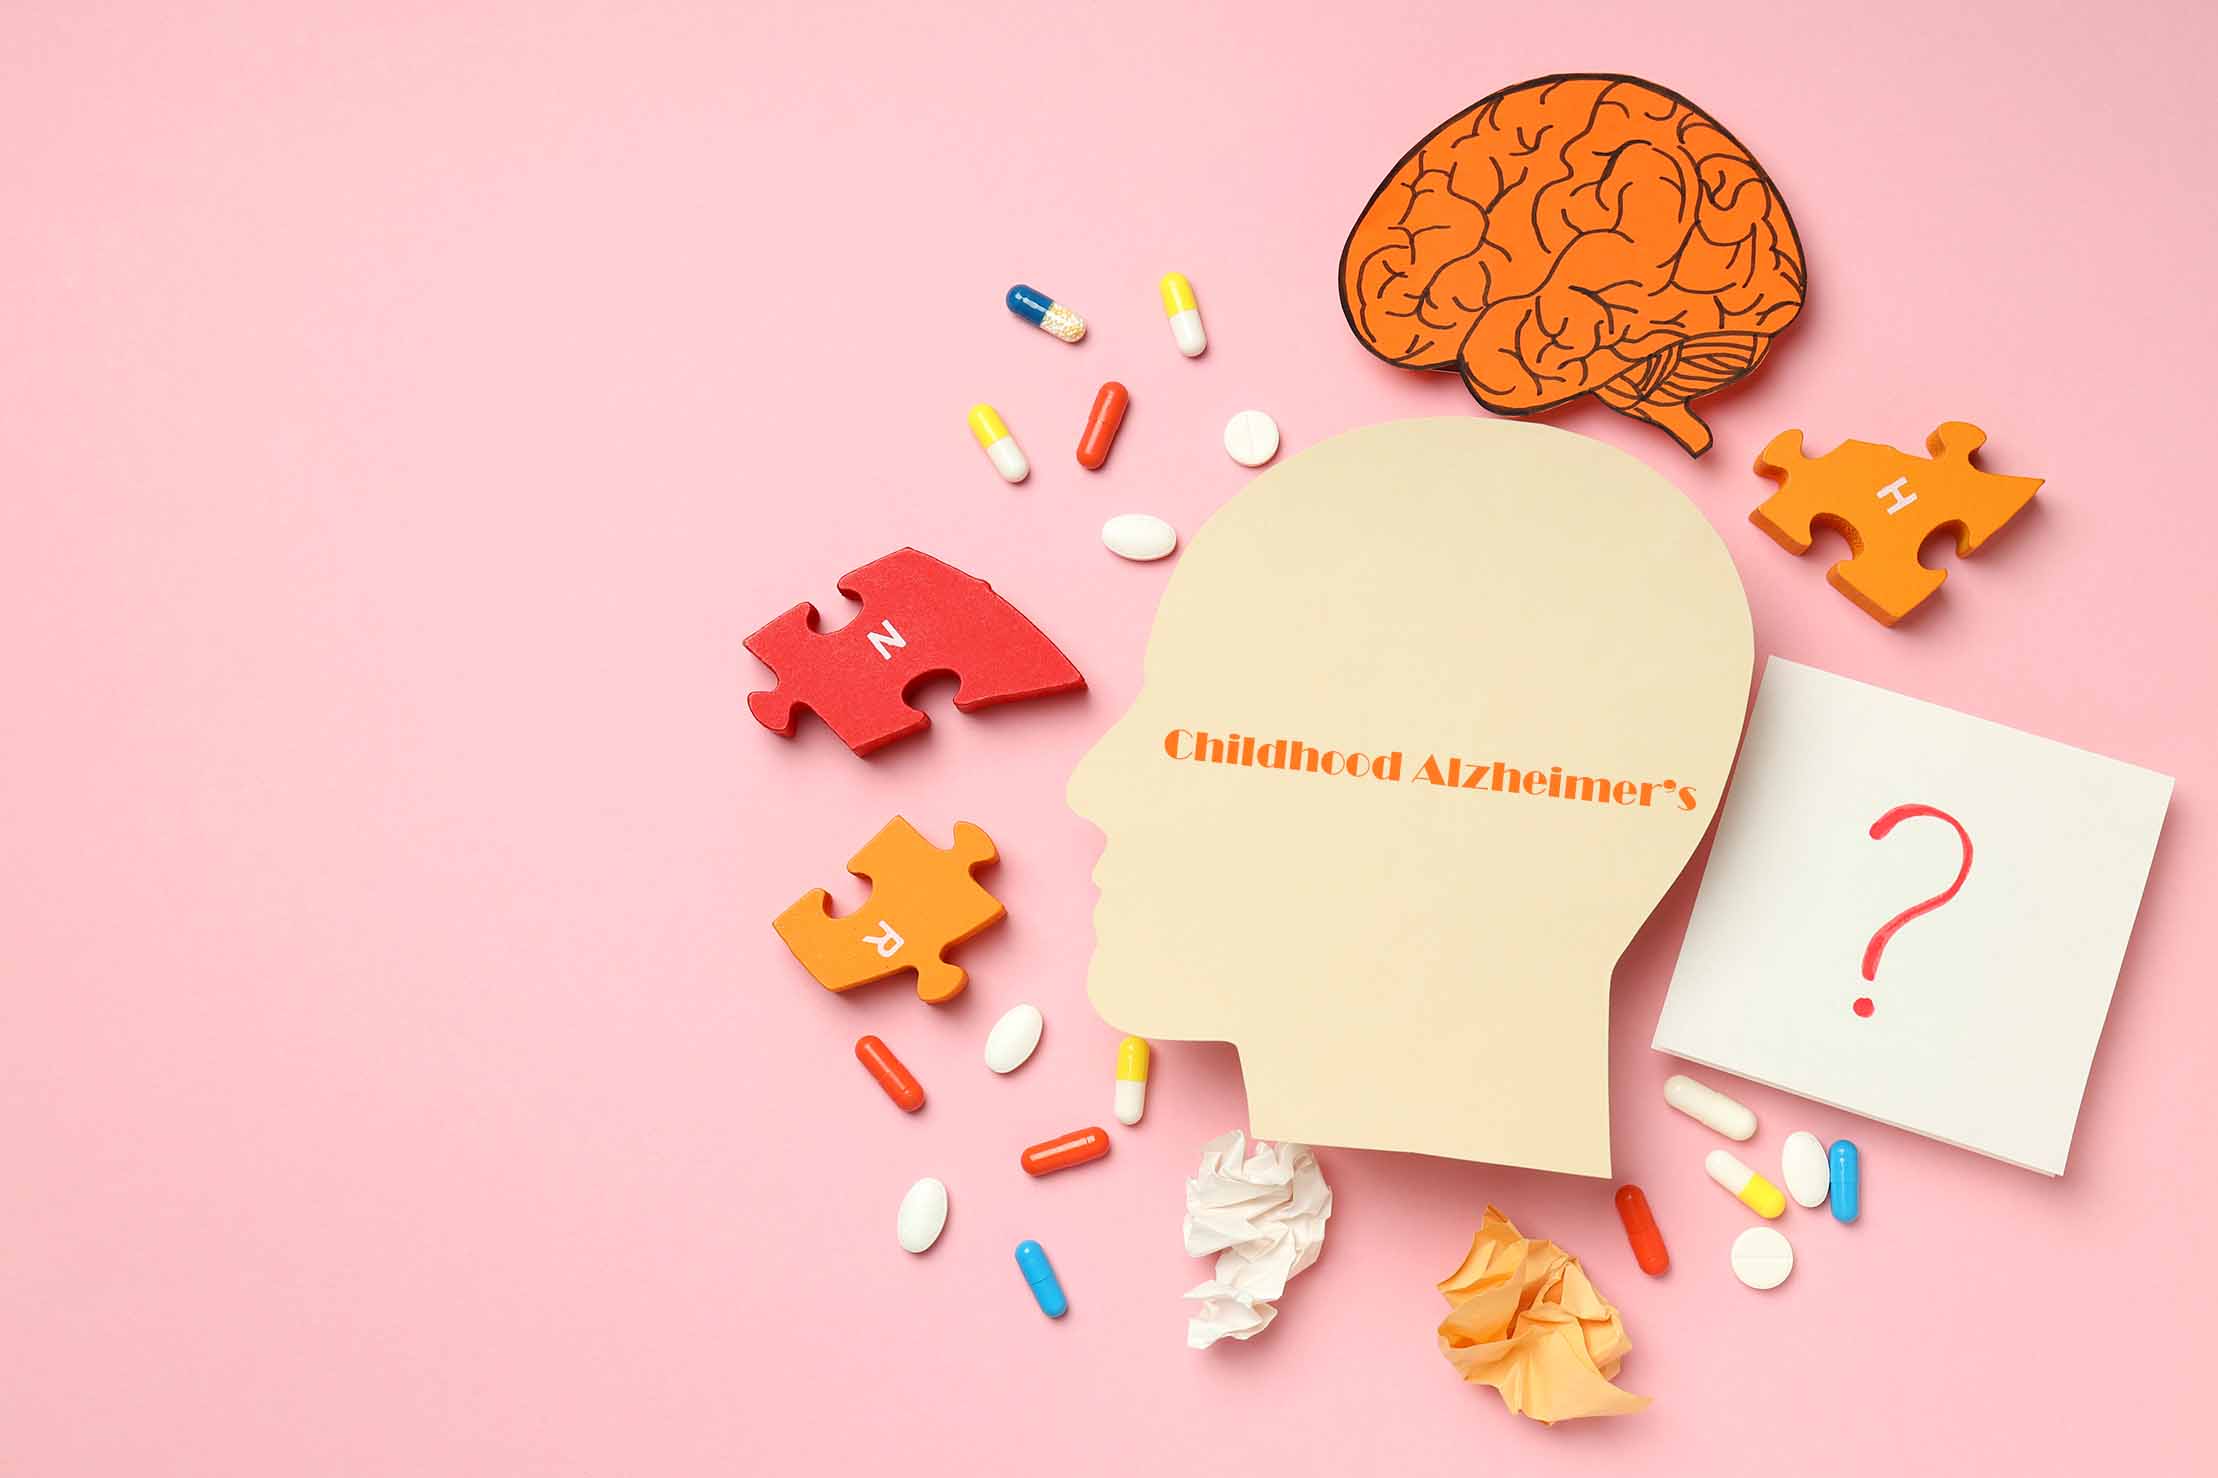 Rare But Real: Childhood Alzheimer's Affects Children Under 18